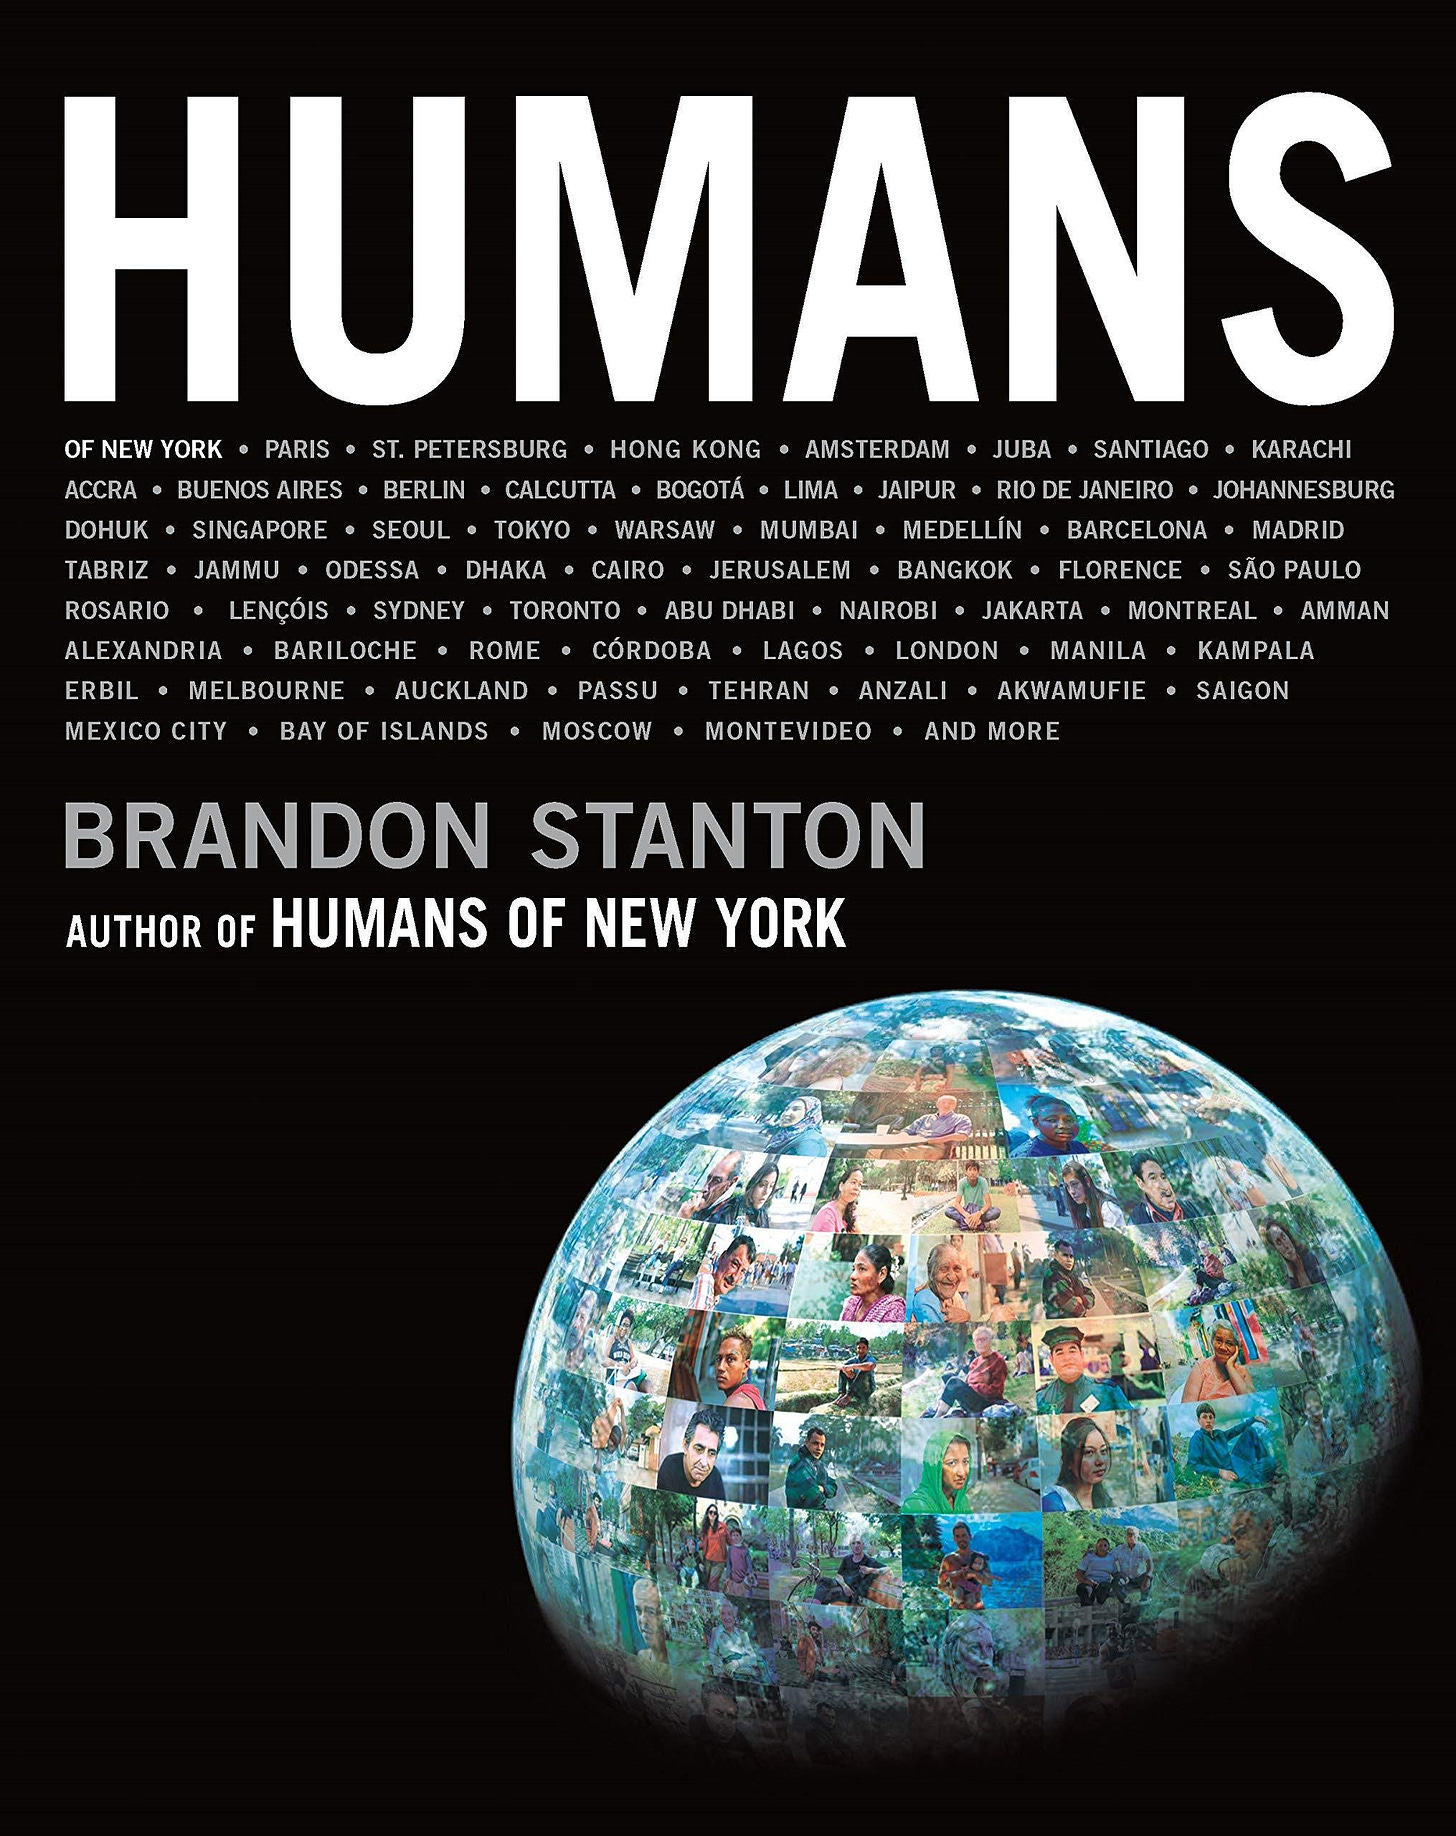 Amazon.com: Humans (9781250114297): Stanton, Brandon: Books